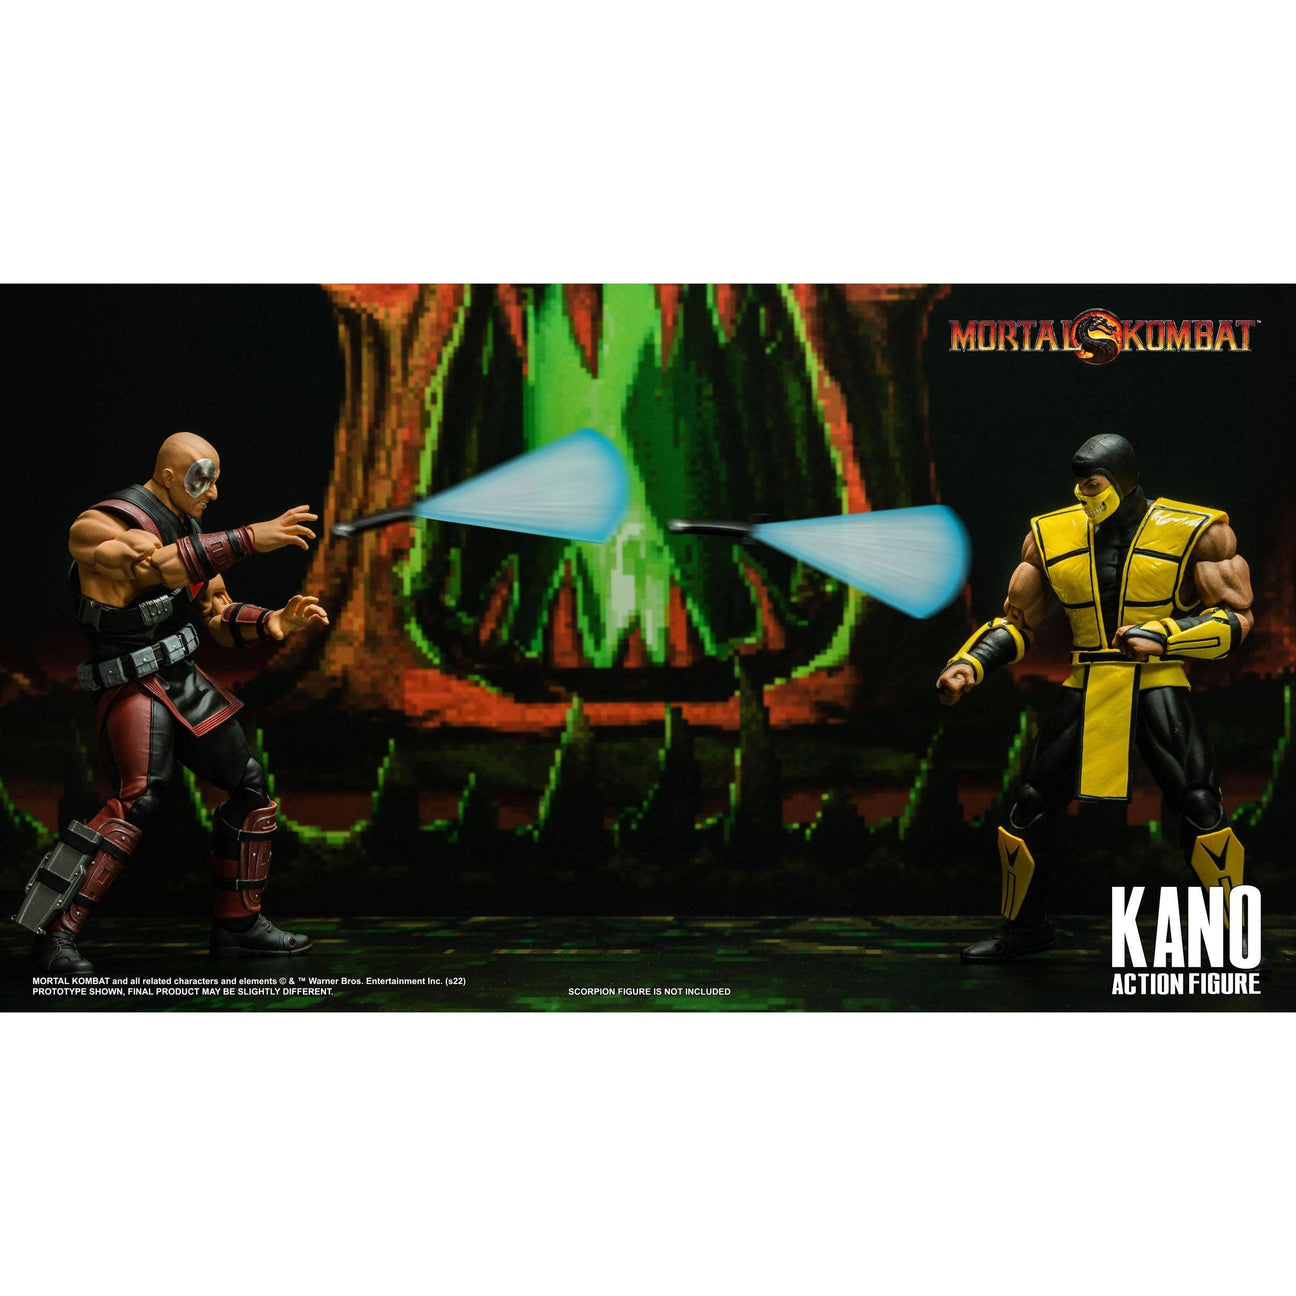 Mortal Kombat: Kano 1/12-Actionfiguren-Storm Collectibles-Mighty Underground